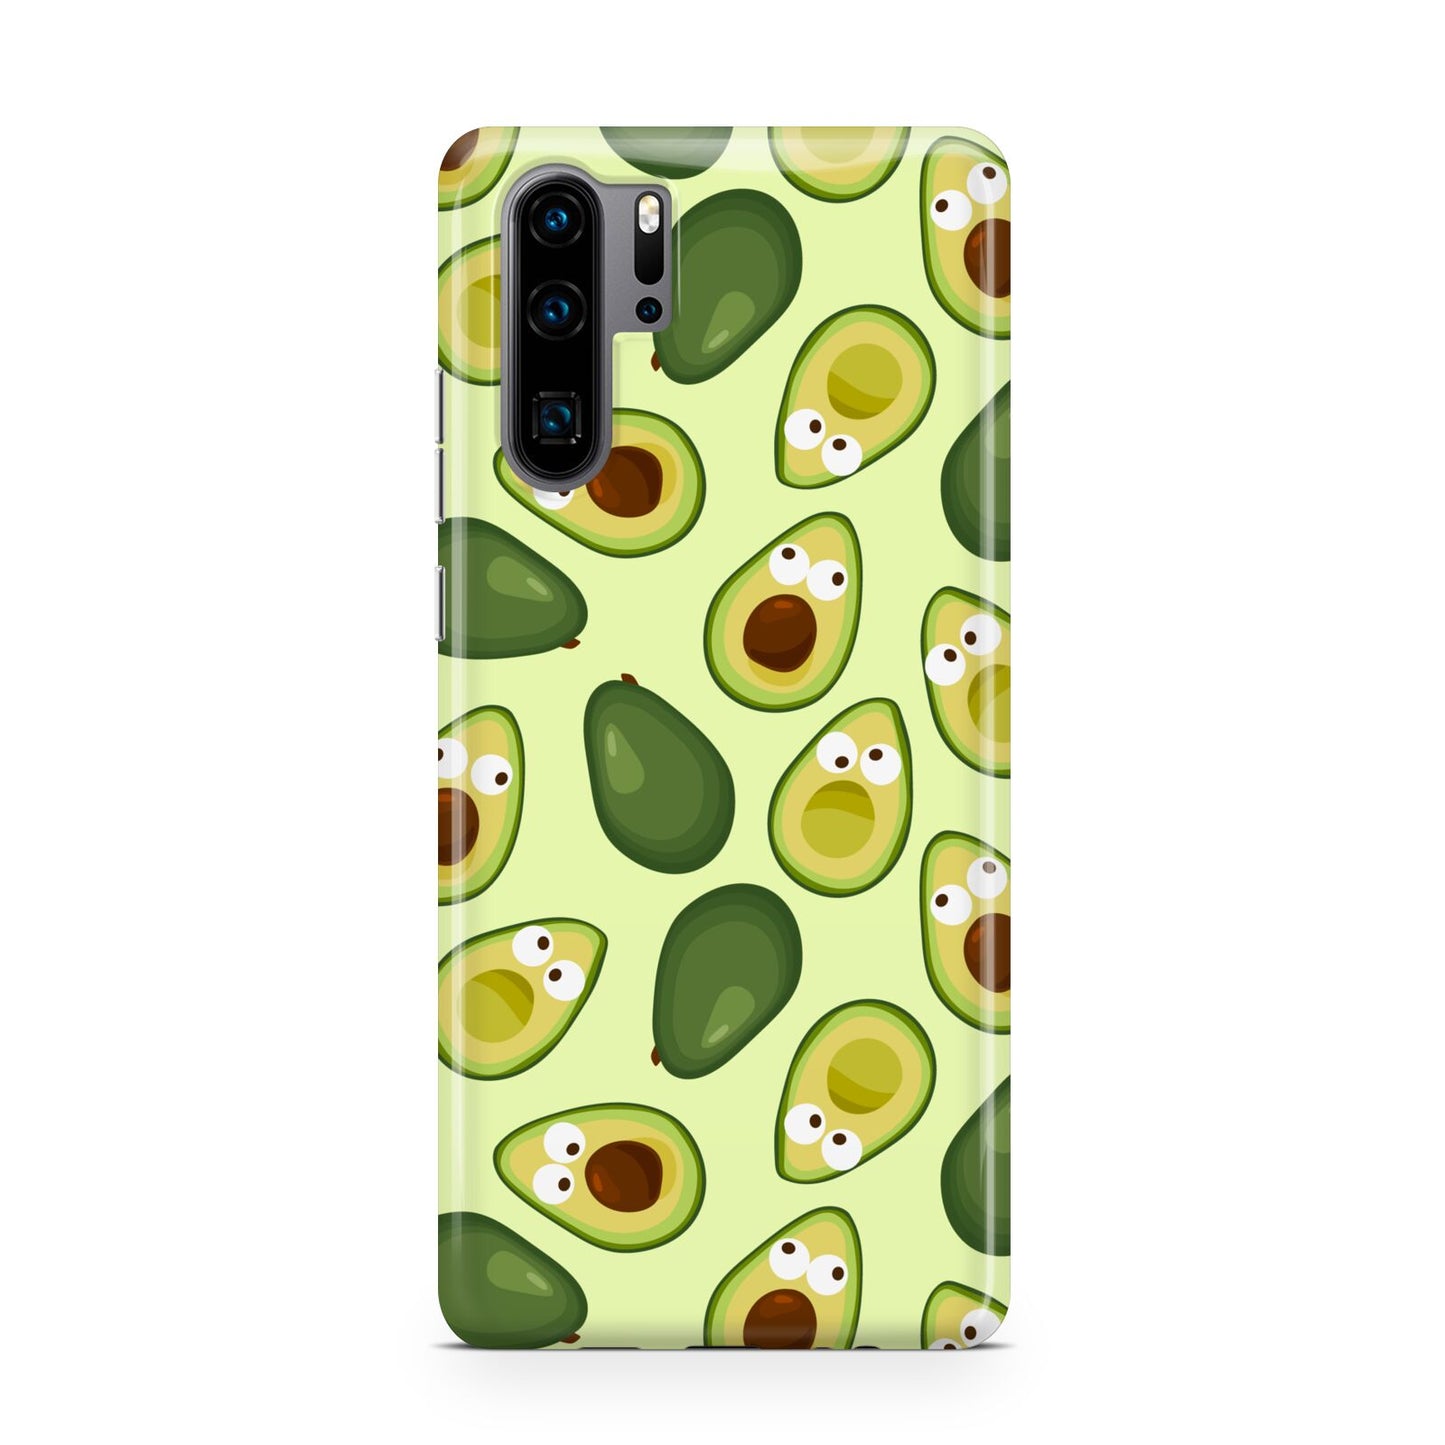 Avocado Huawei P30 Pro Phone Case